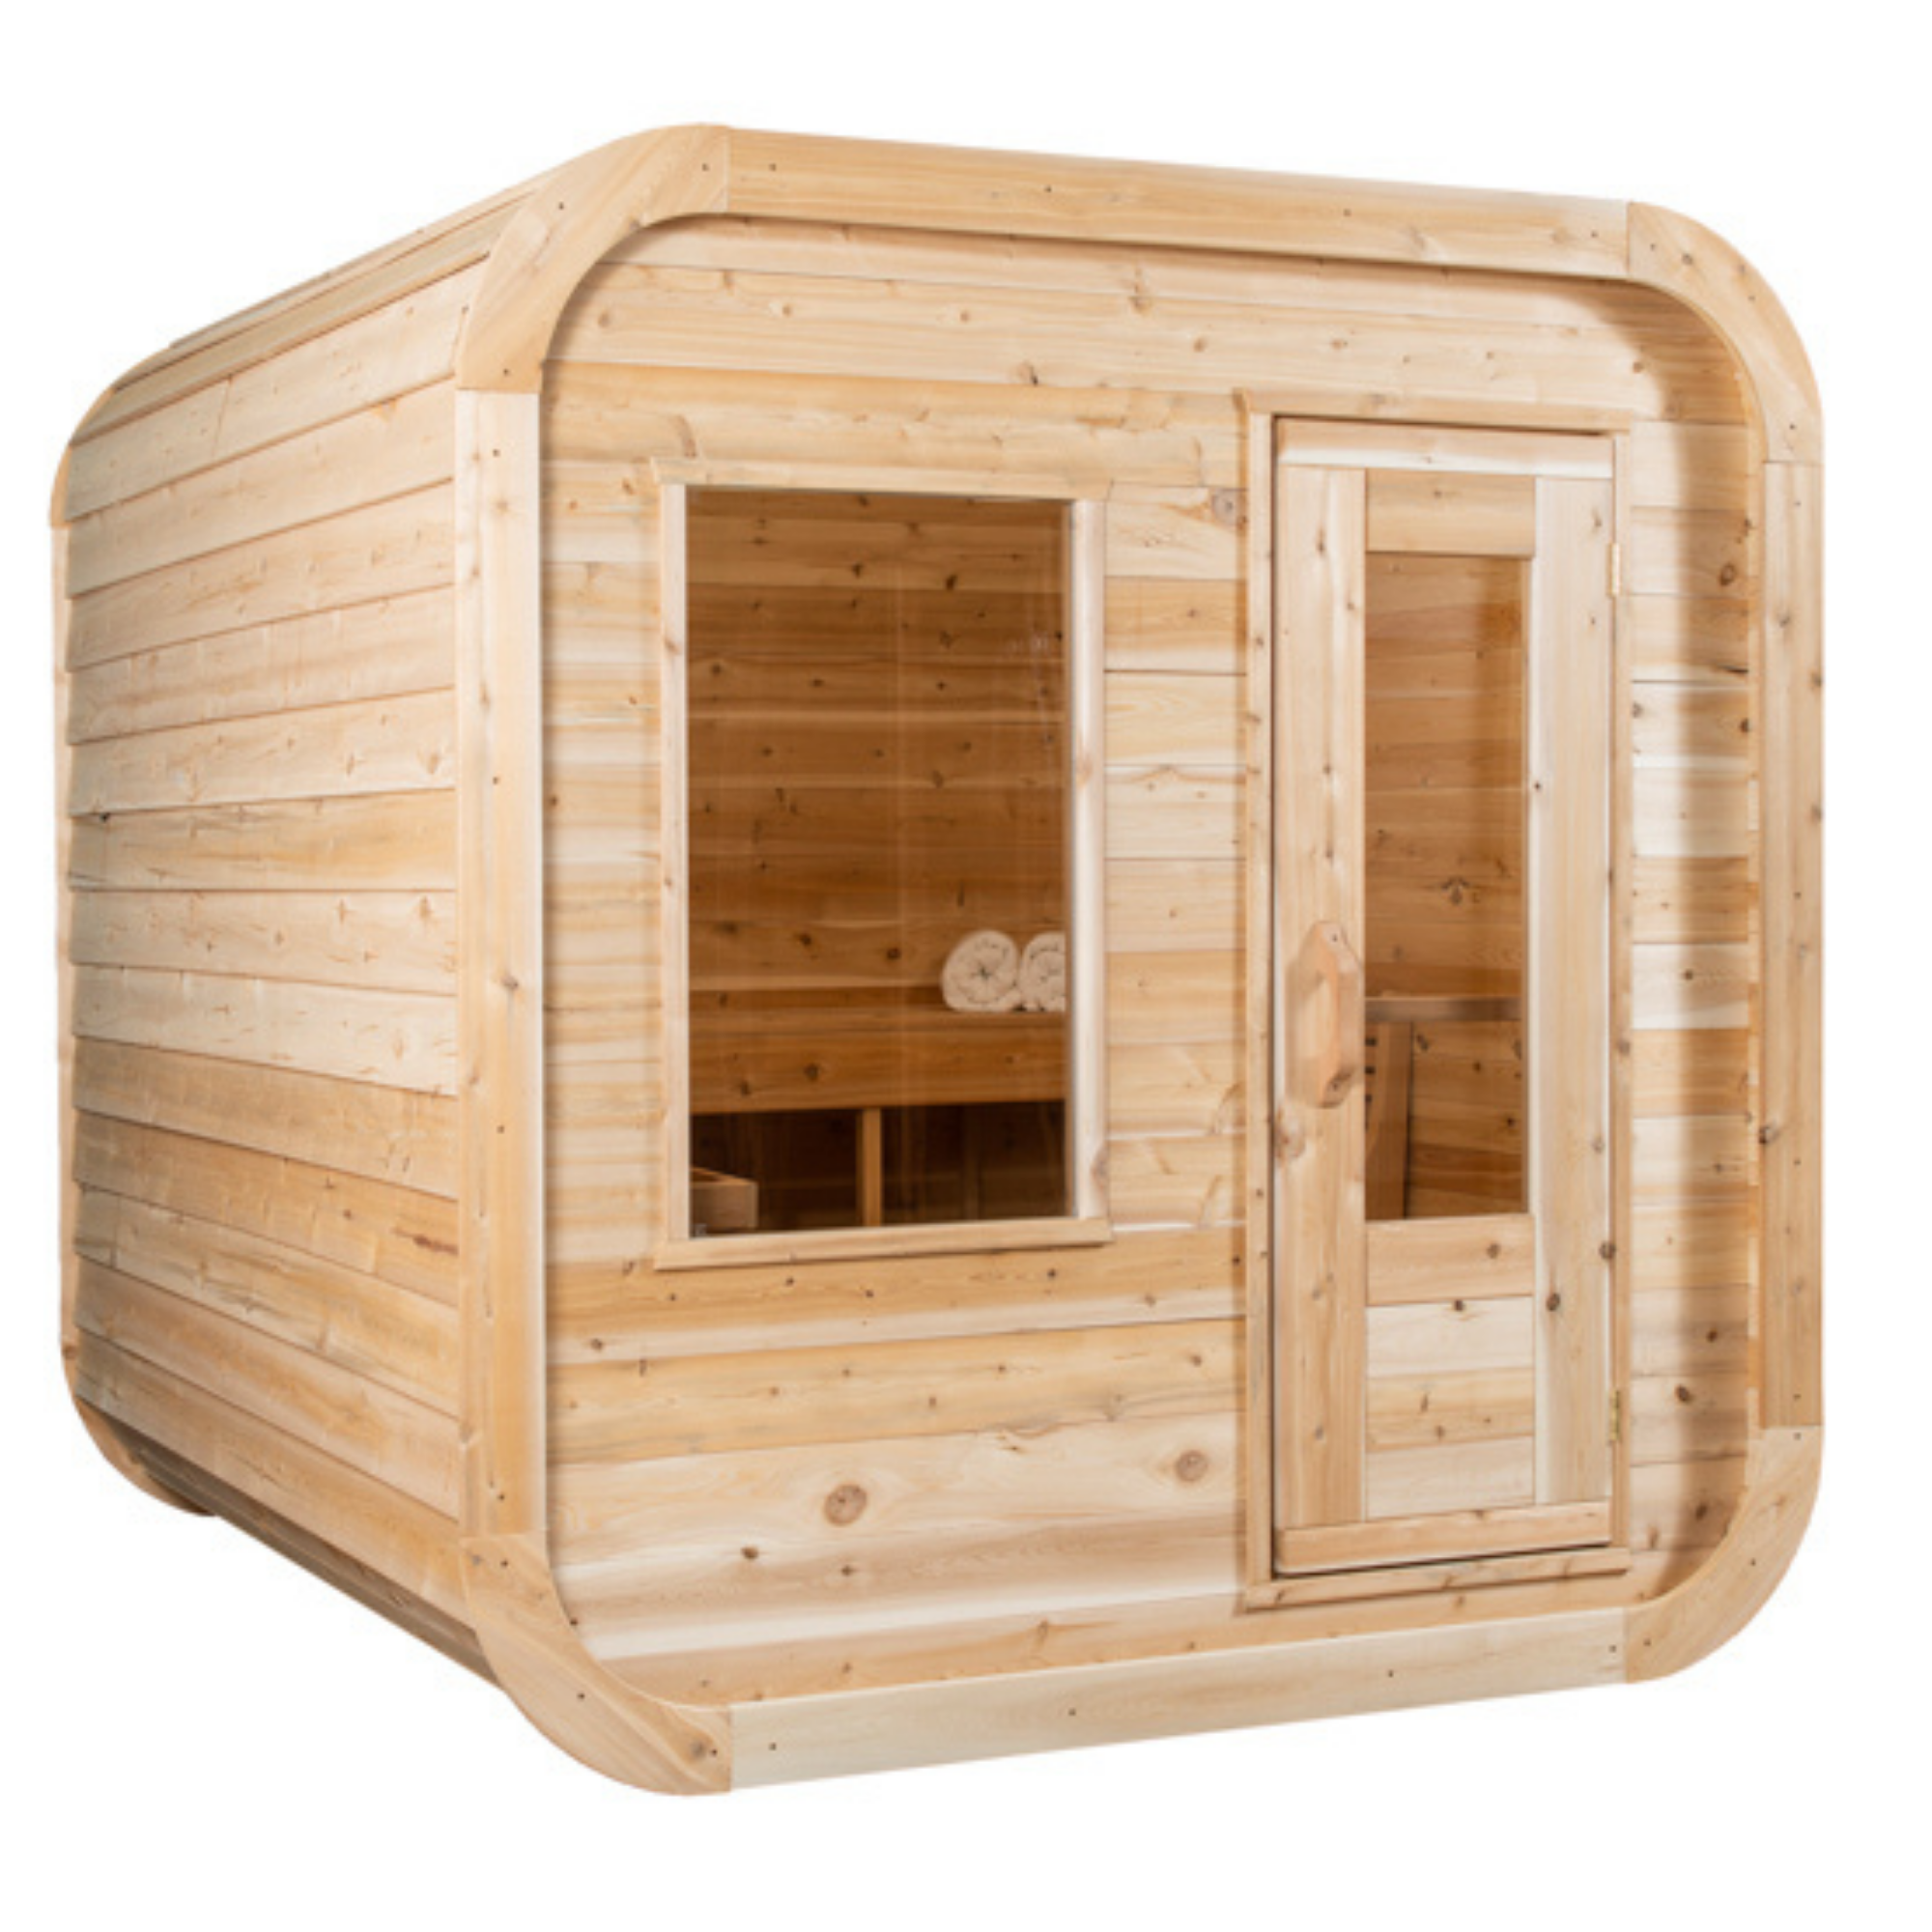 Canadian Timber Luna Sauna CTC22LU